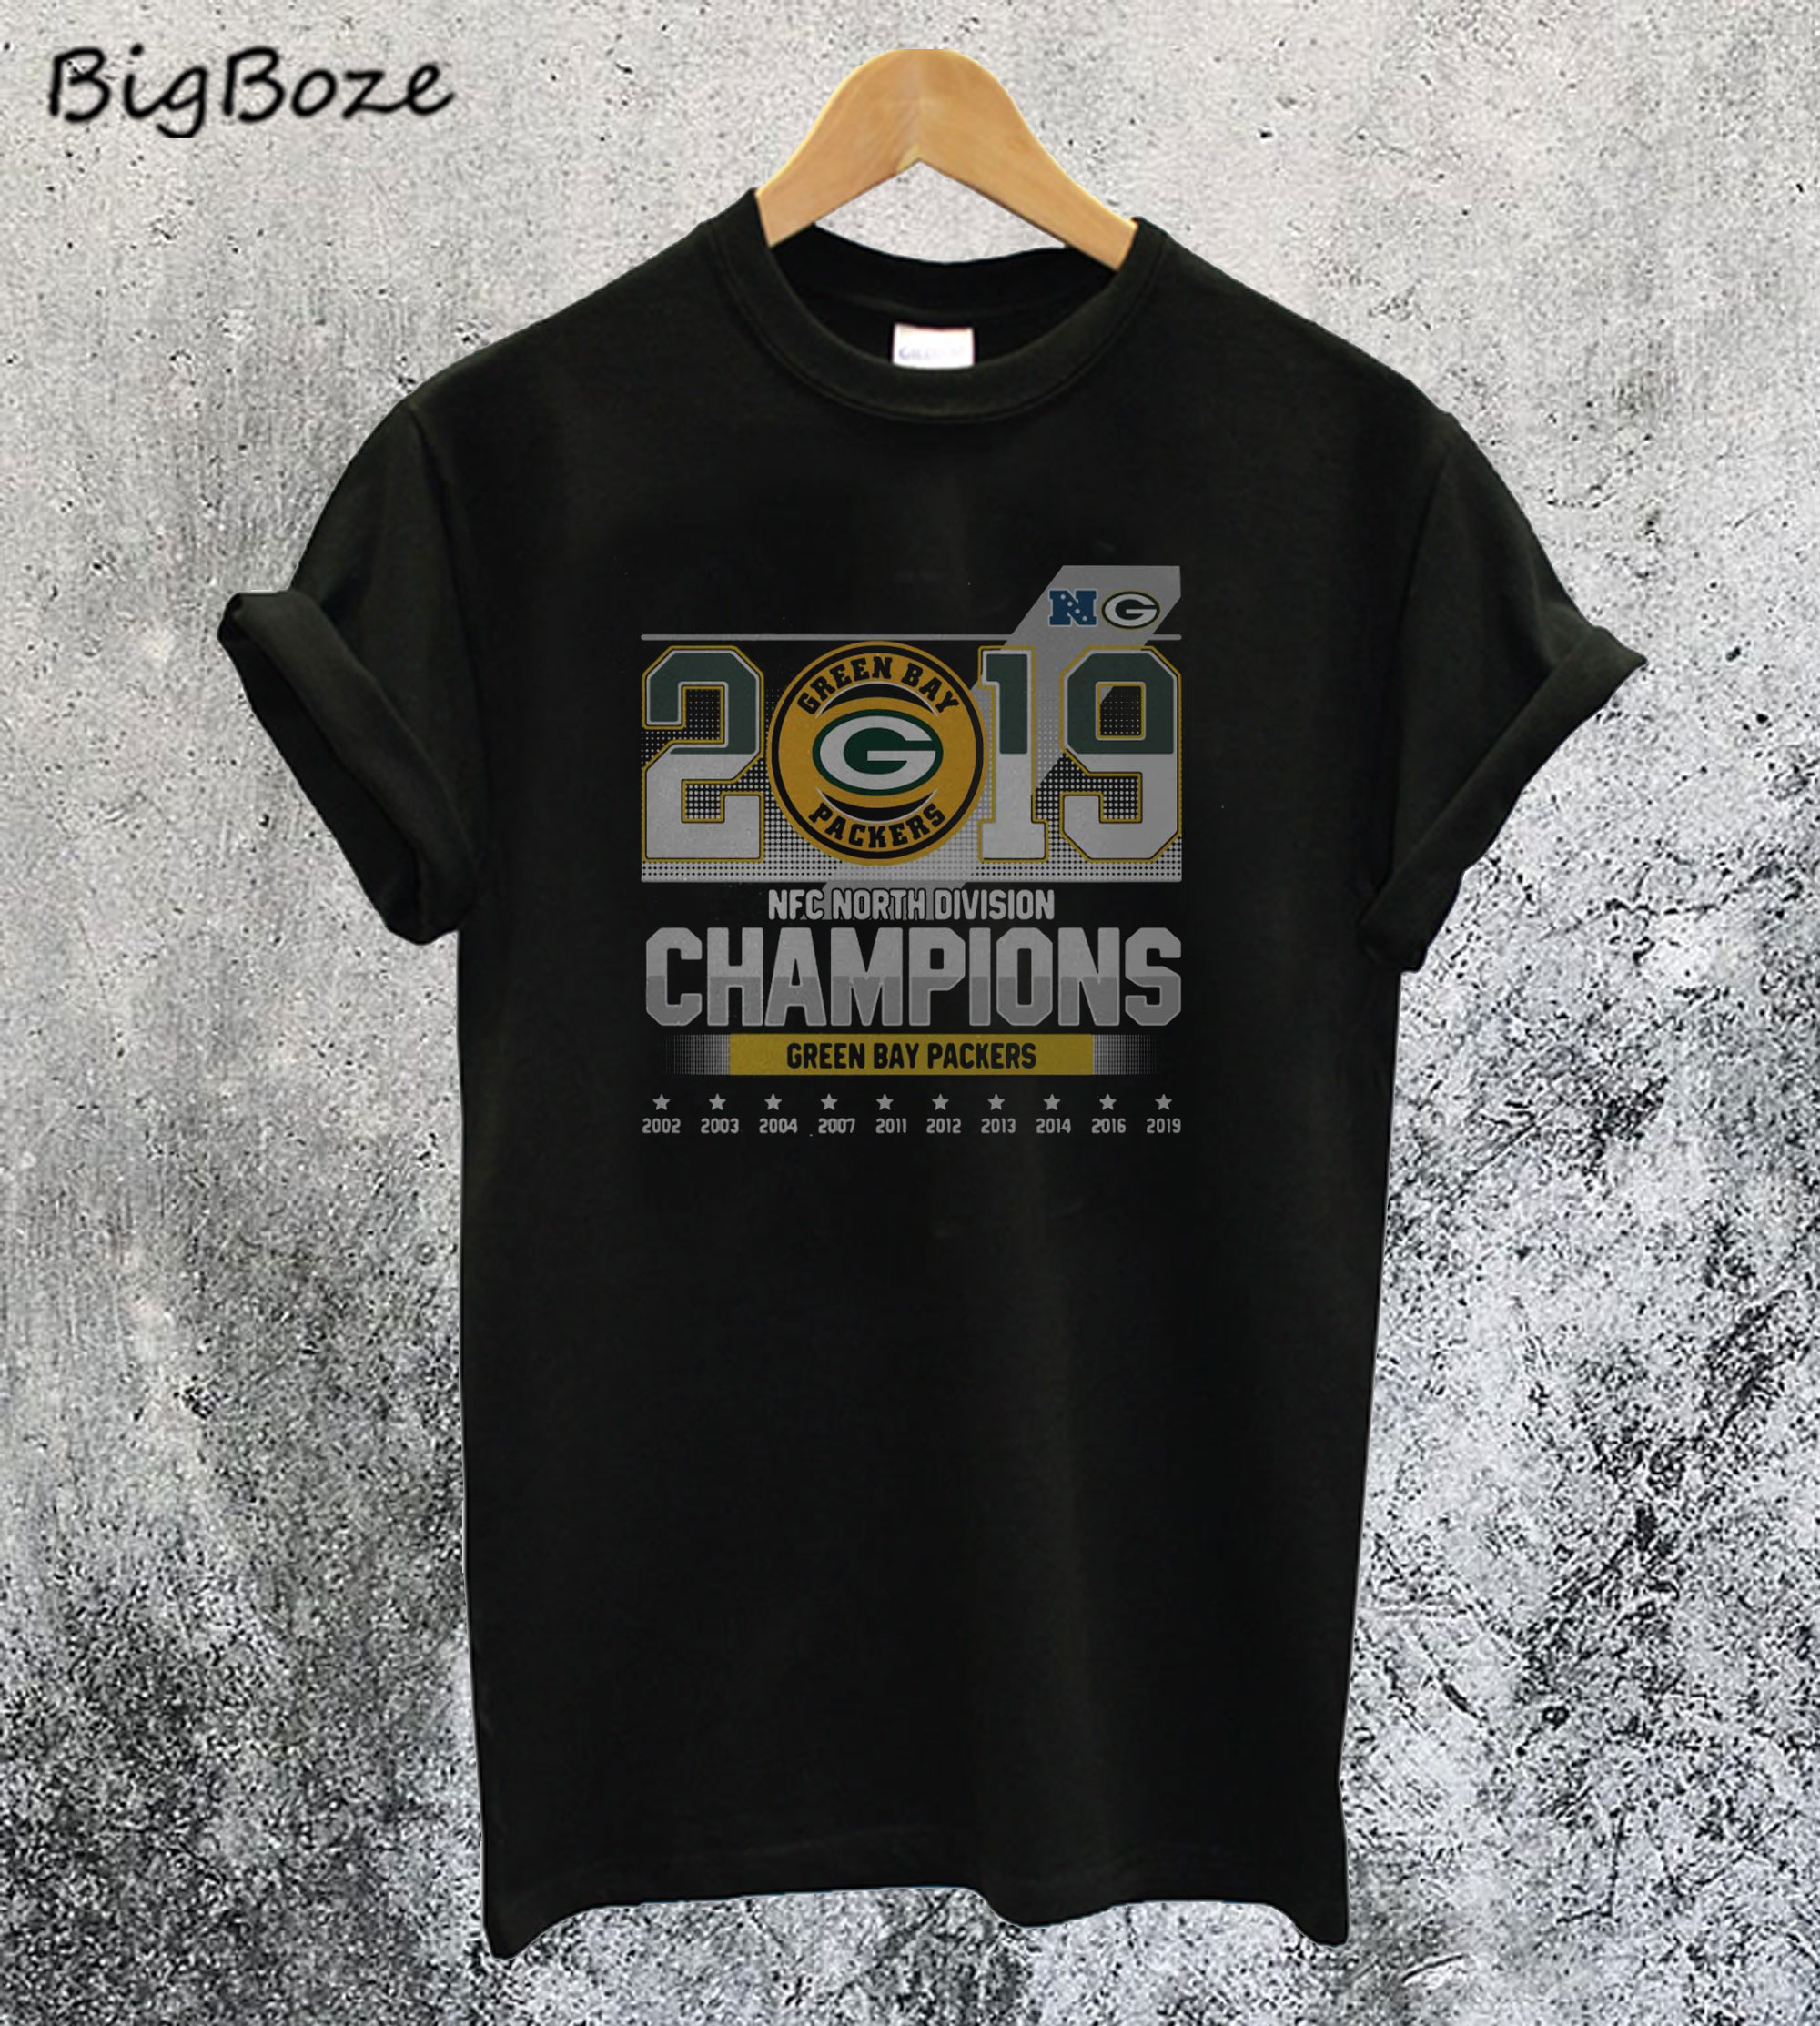 Green Bay Packers 2019 NFC North Division Champions T-Shirt